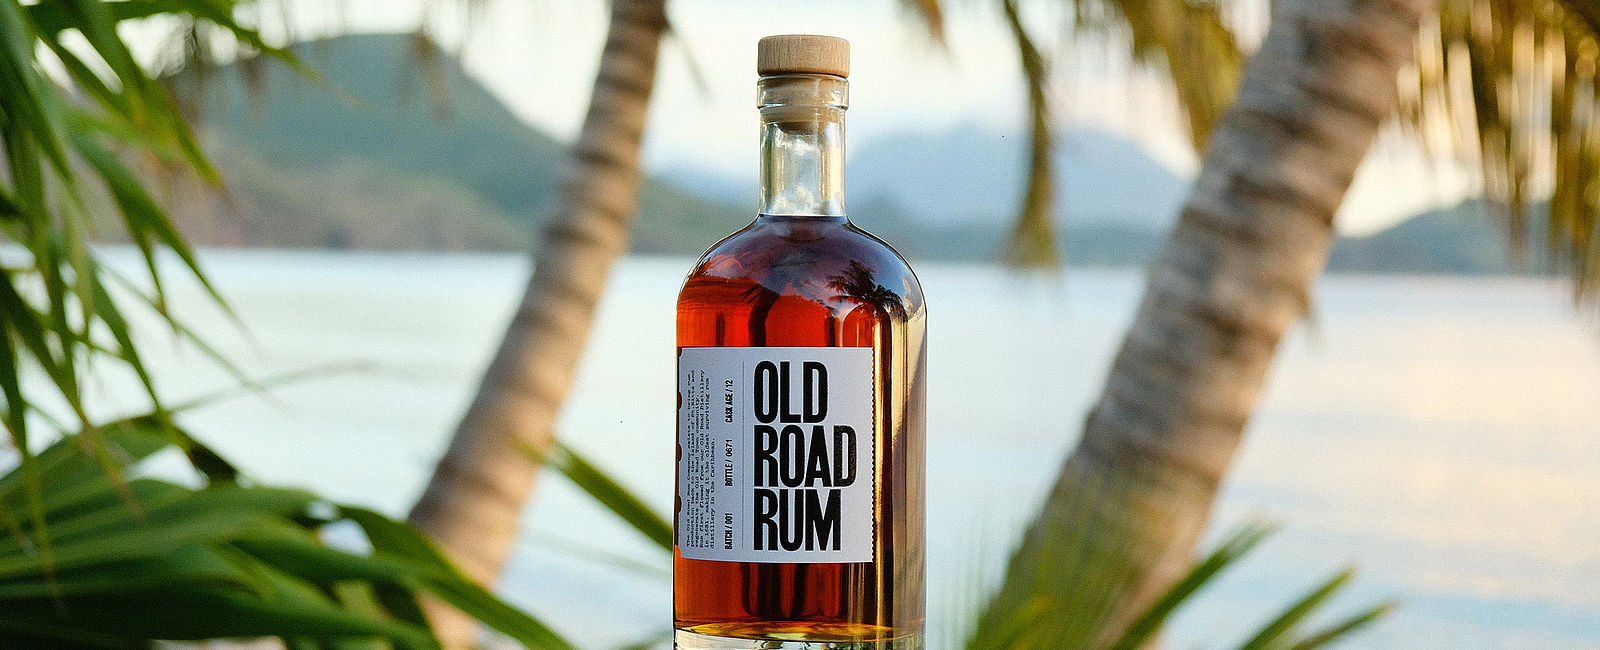 NEWS
 Rum-Renaissance auf St. Kitts 
